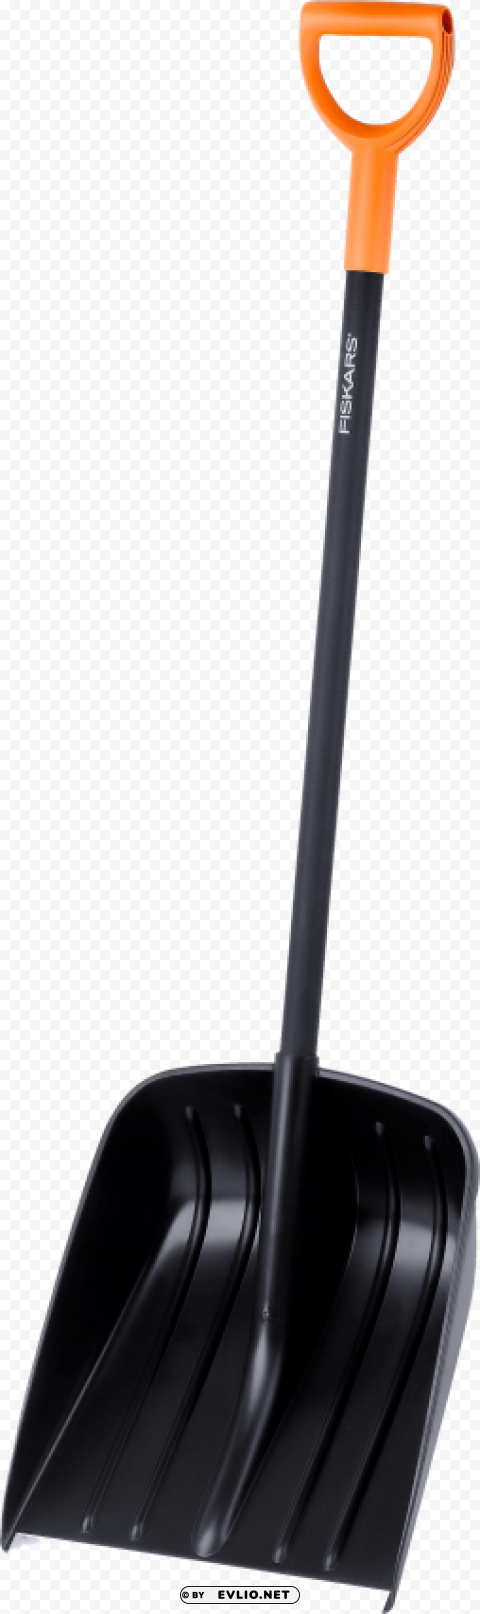 shovel Transparent Background Isolation in PNG Image